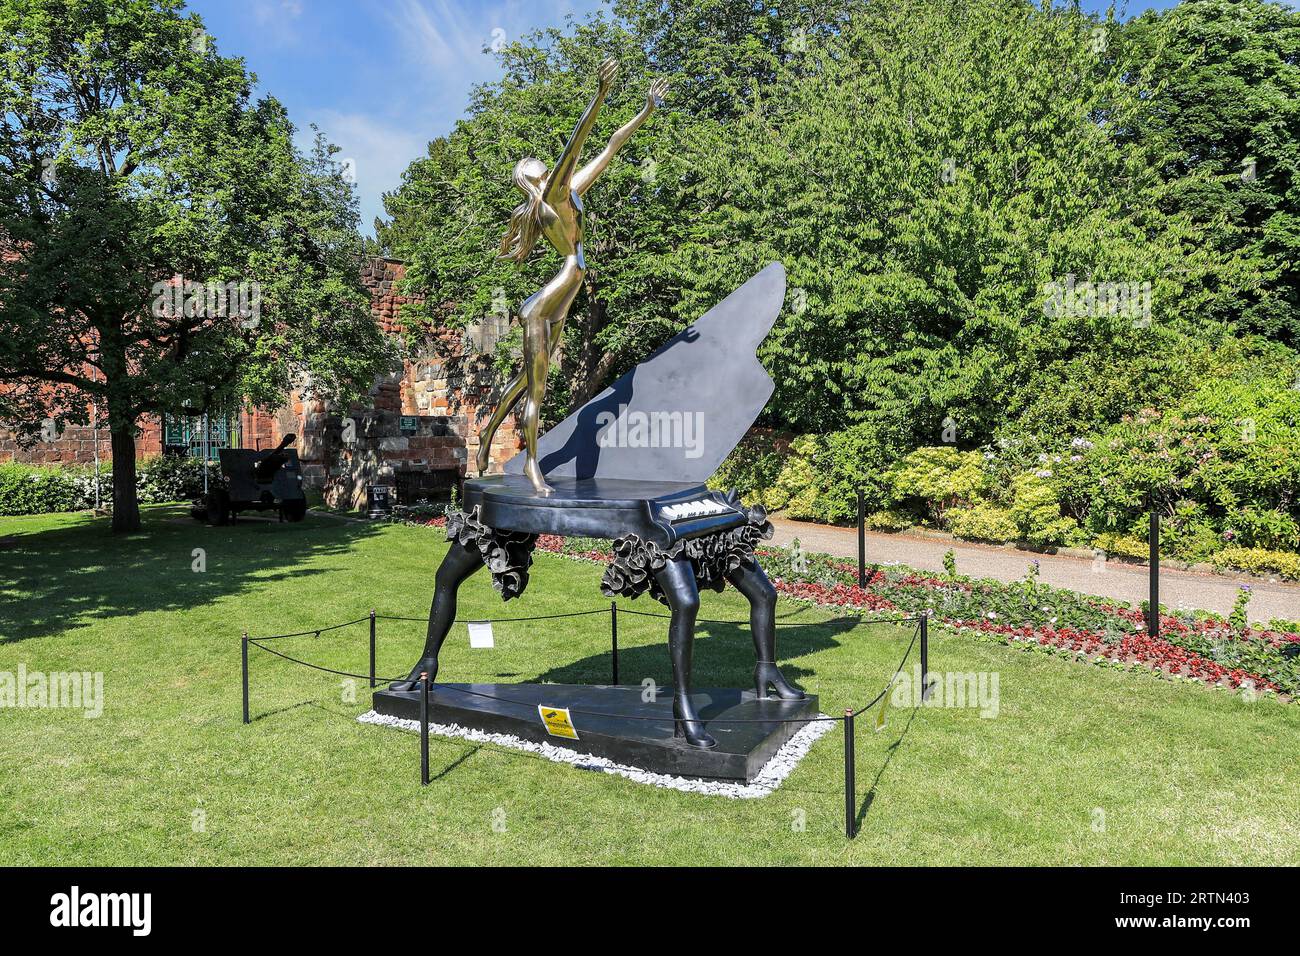 A sculpture by Salvador Dali called ‘Surrealist Piano’ outside the entrance to Shrewsbury Castle, Shrewsbury, Shropshire, England, UK Stock Photo